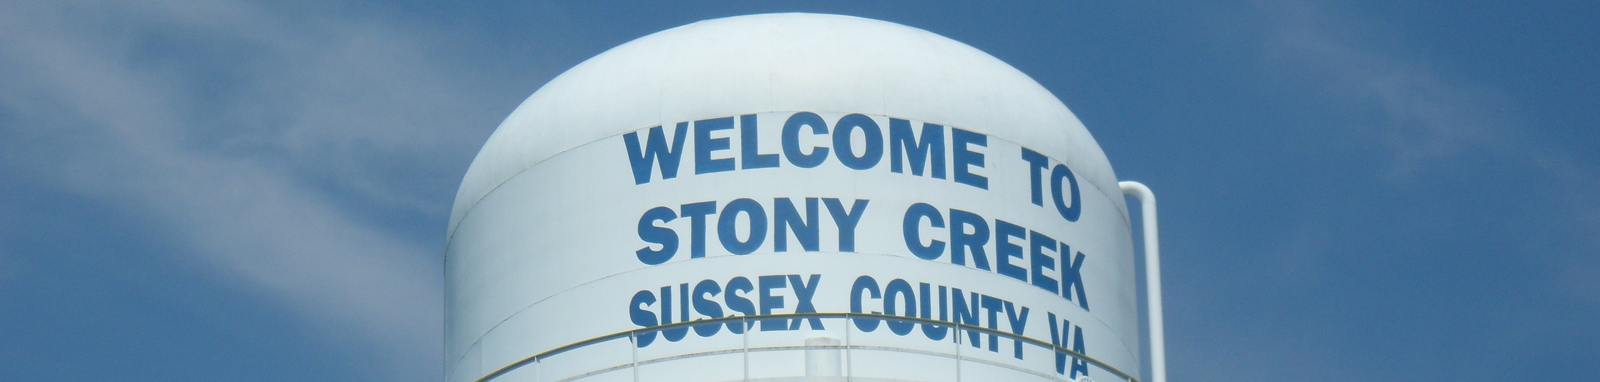 Town of Stony Creek